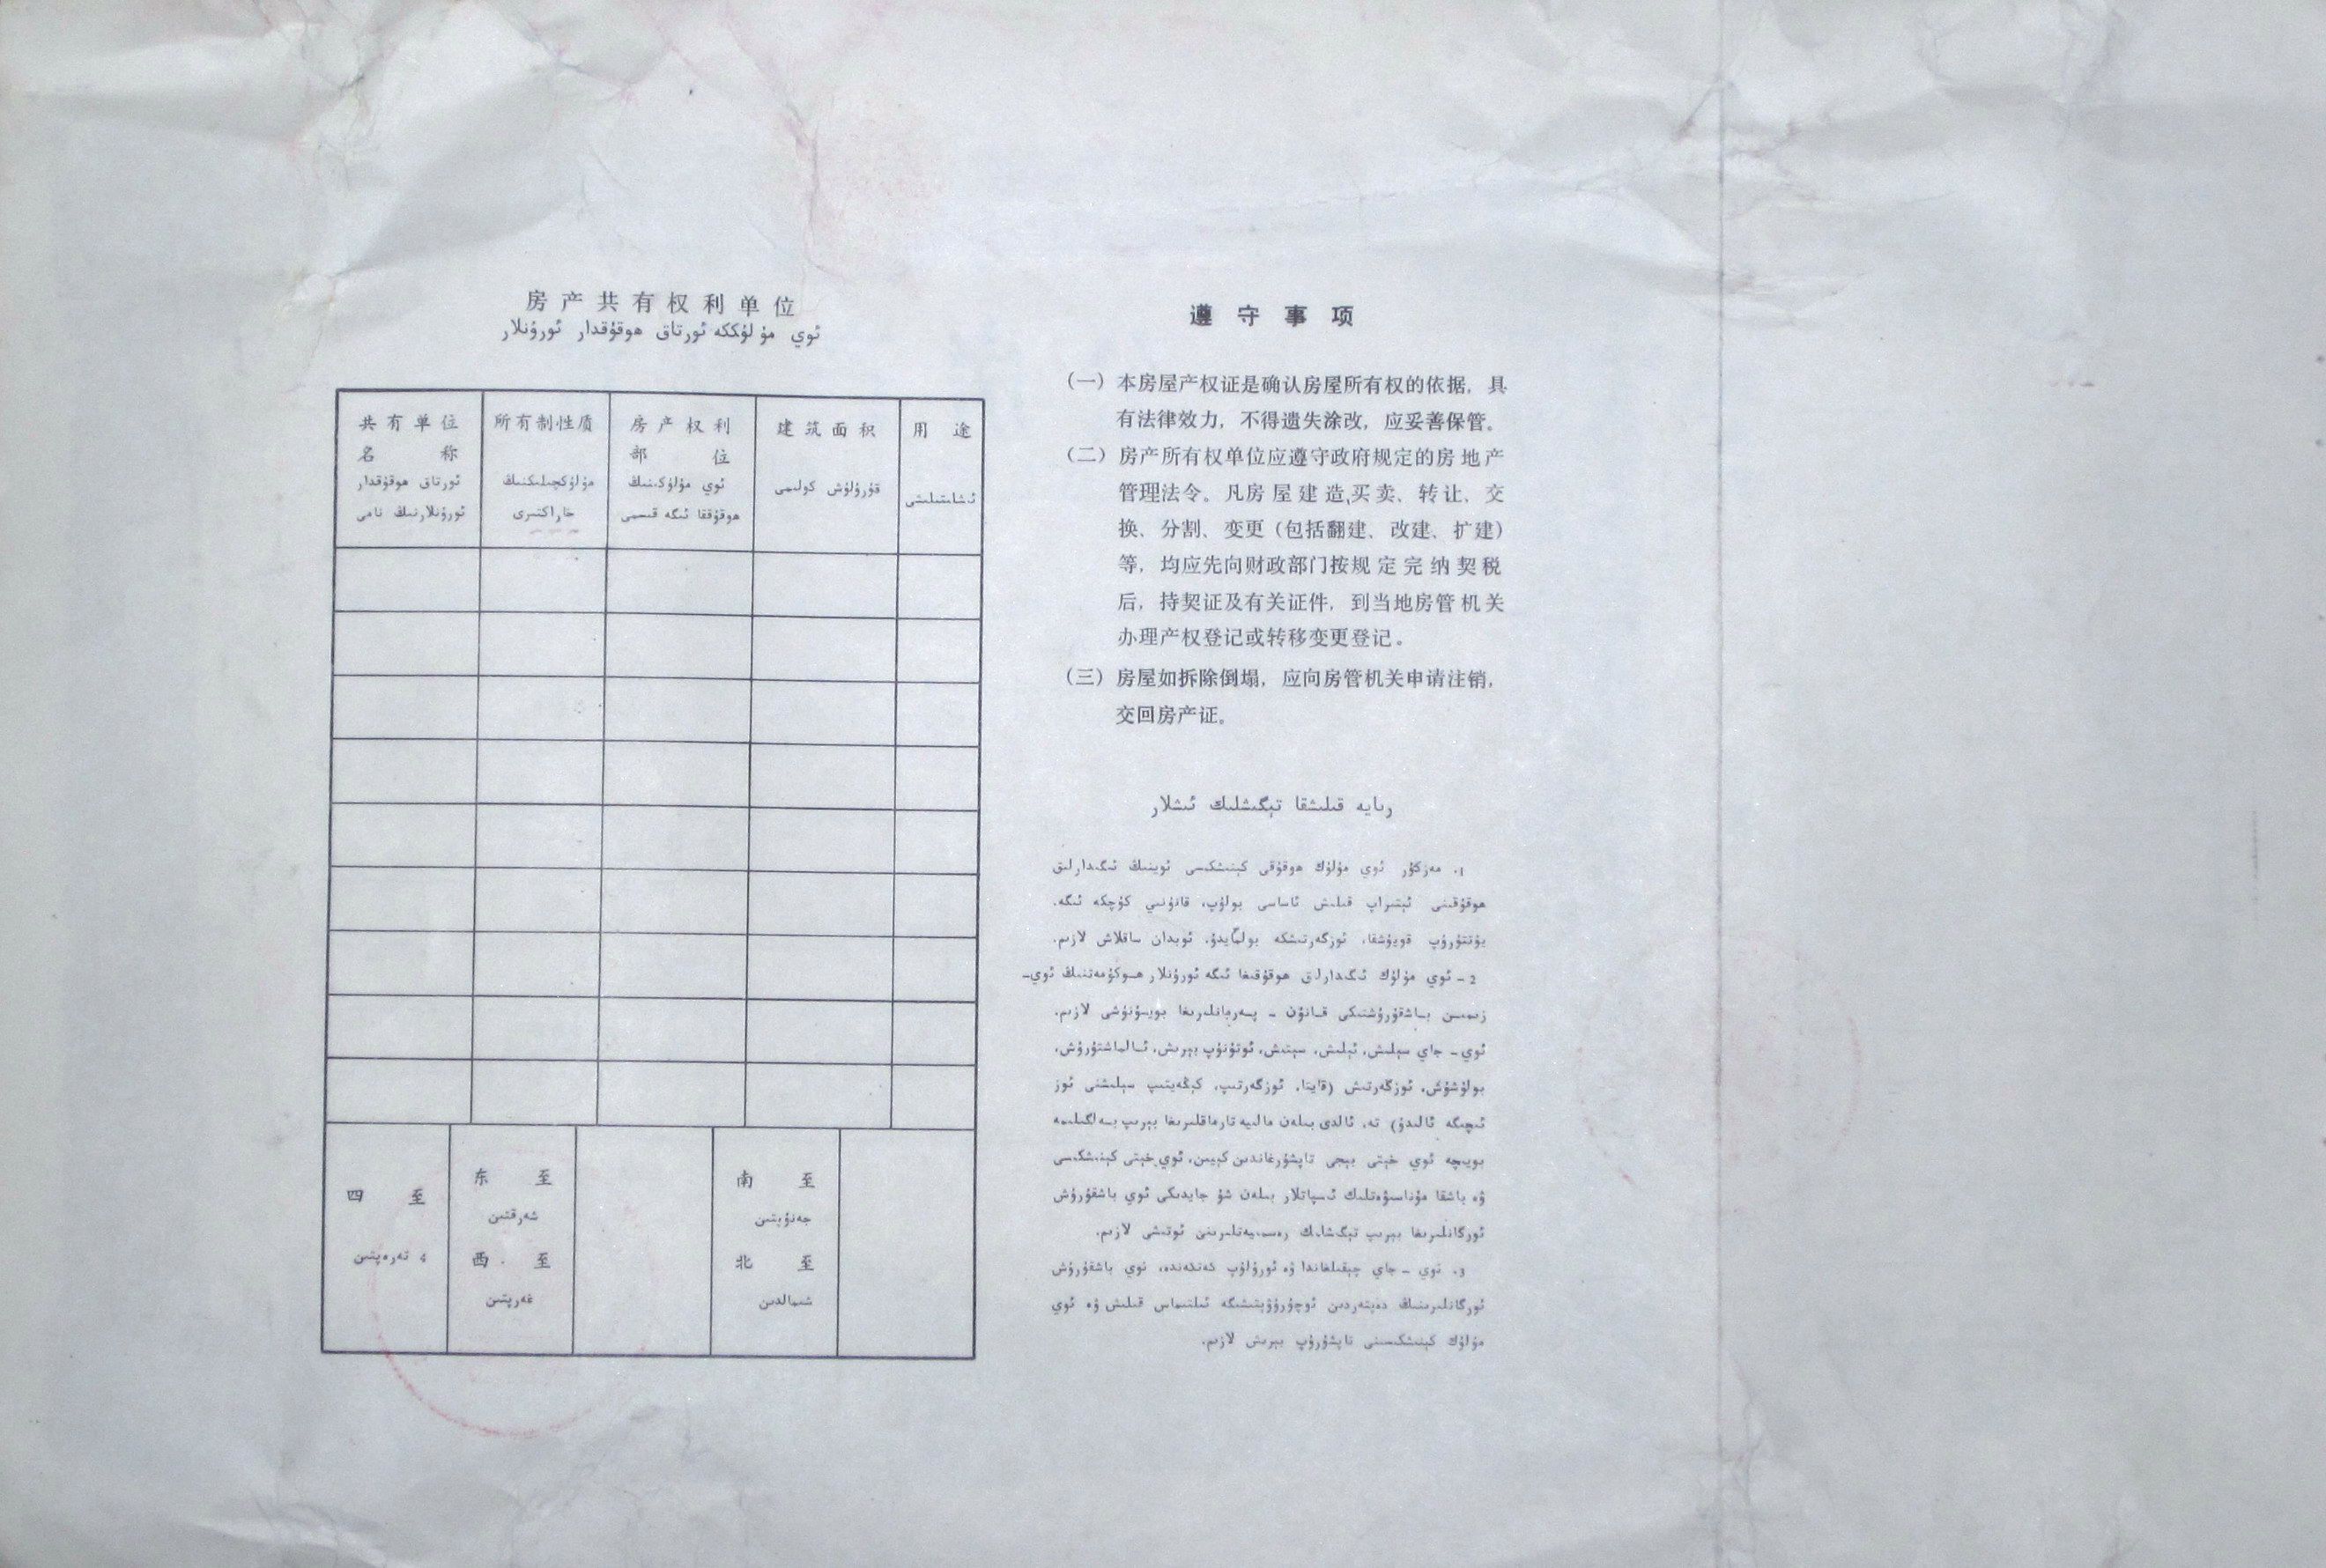 D4070, Land Licence of Sinkiang (Xinjiang), Bilingual 1980's, unused